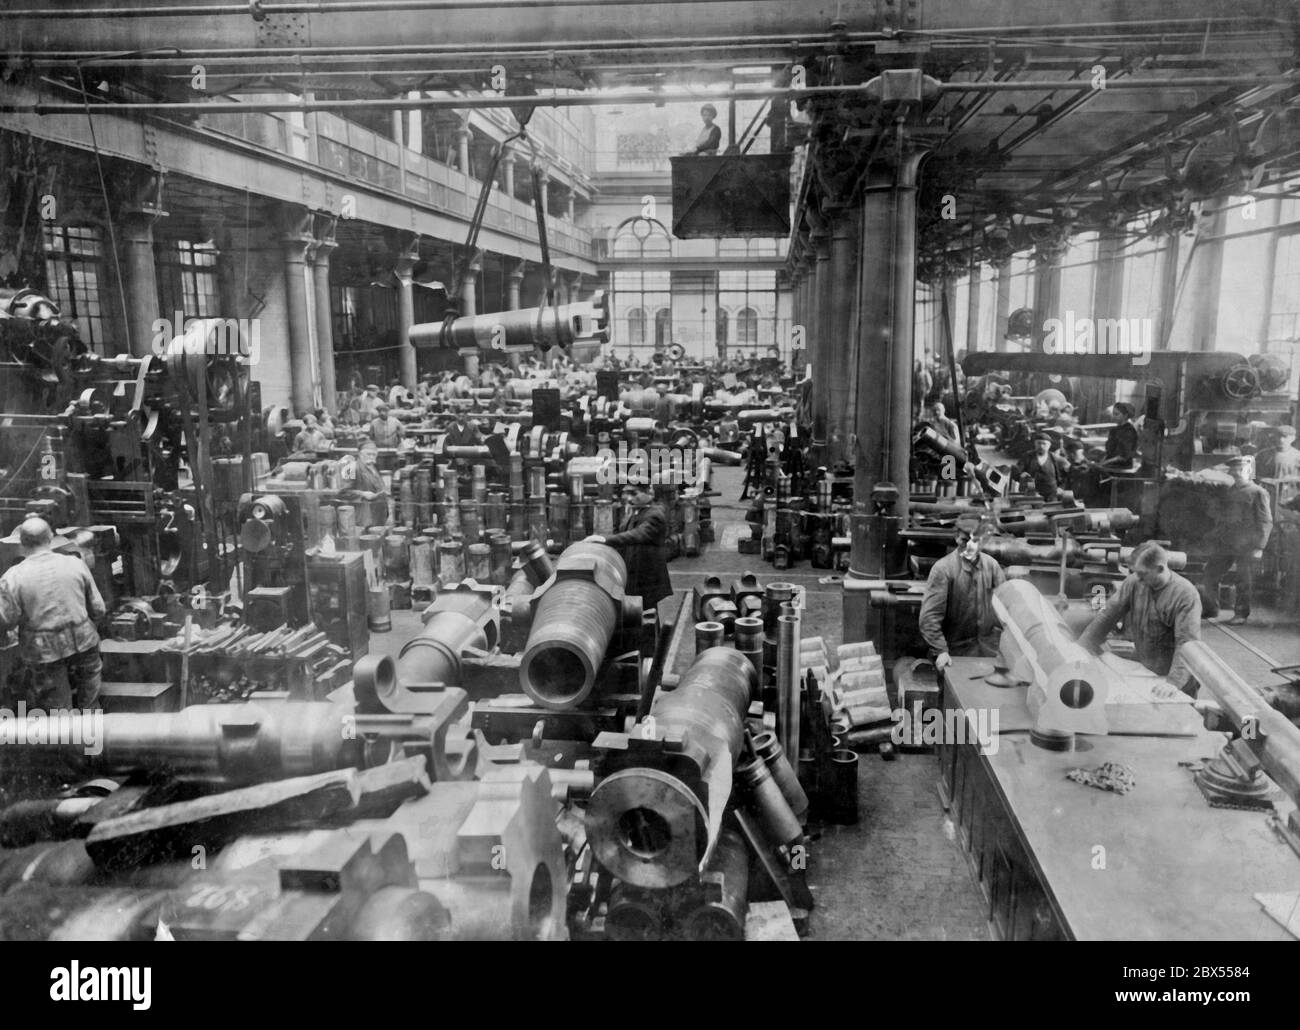 Gun barrel production of a state gun foundry. Stock Photo